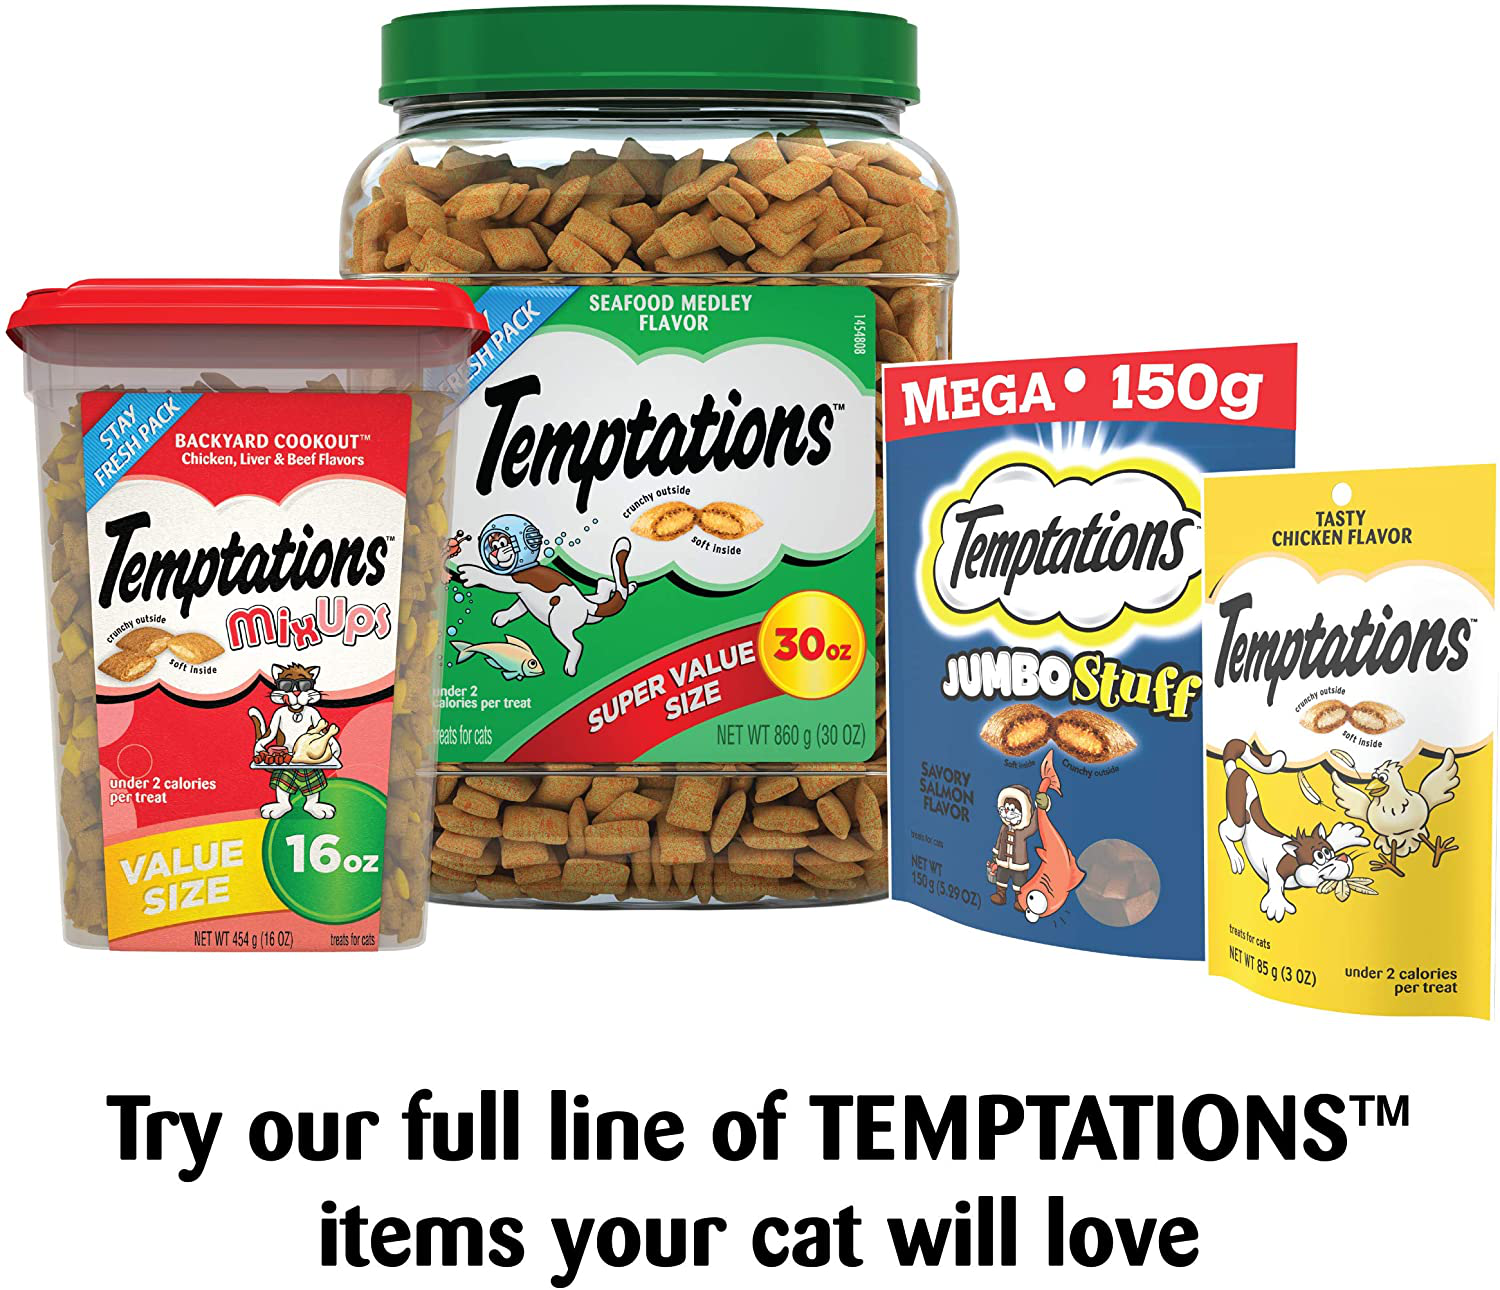 TEMPTATIONS Hairball Control Cat Treats, Chicken Flavor